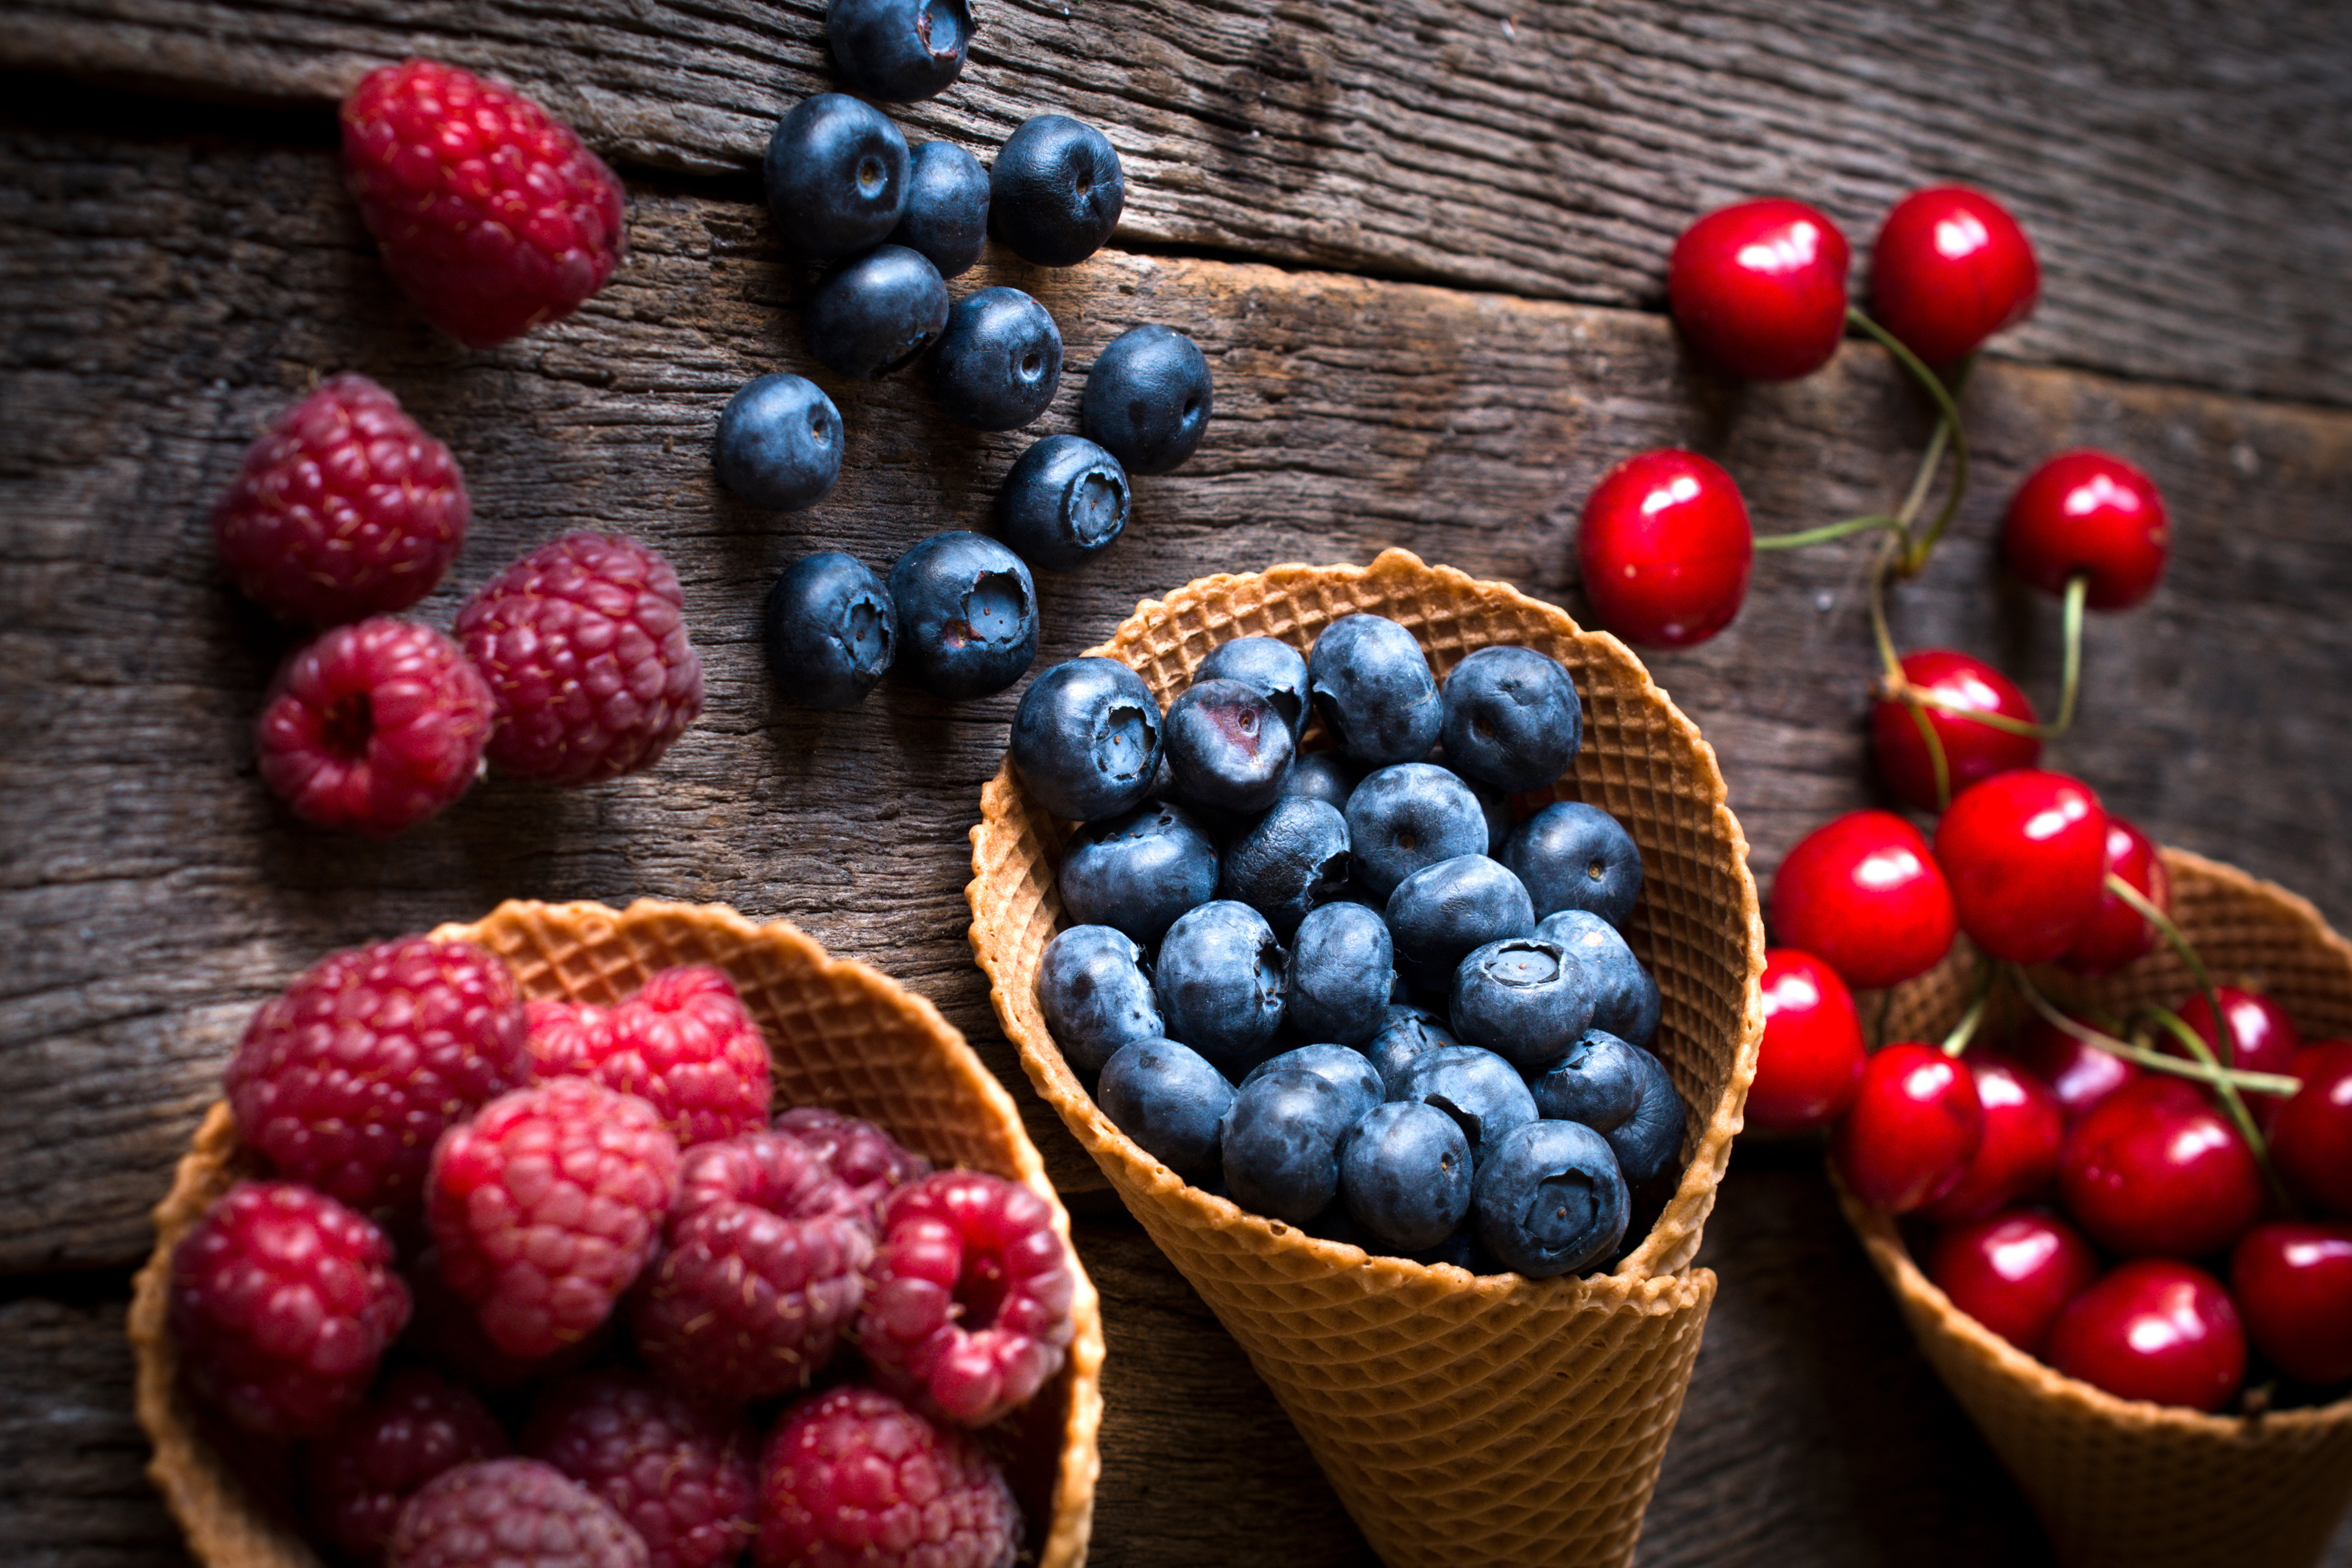 еда ягоды земляника черника ведро food berries strawberries blueberries bucket загрузить